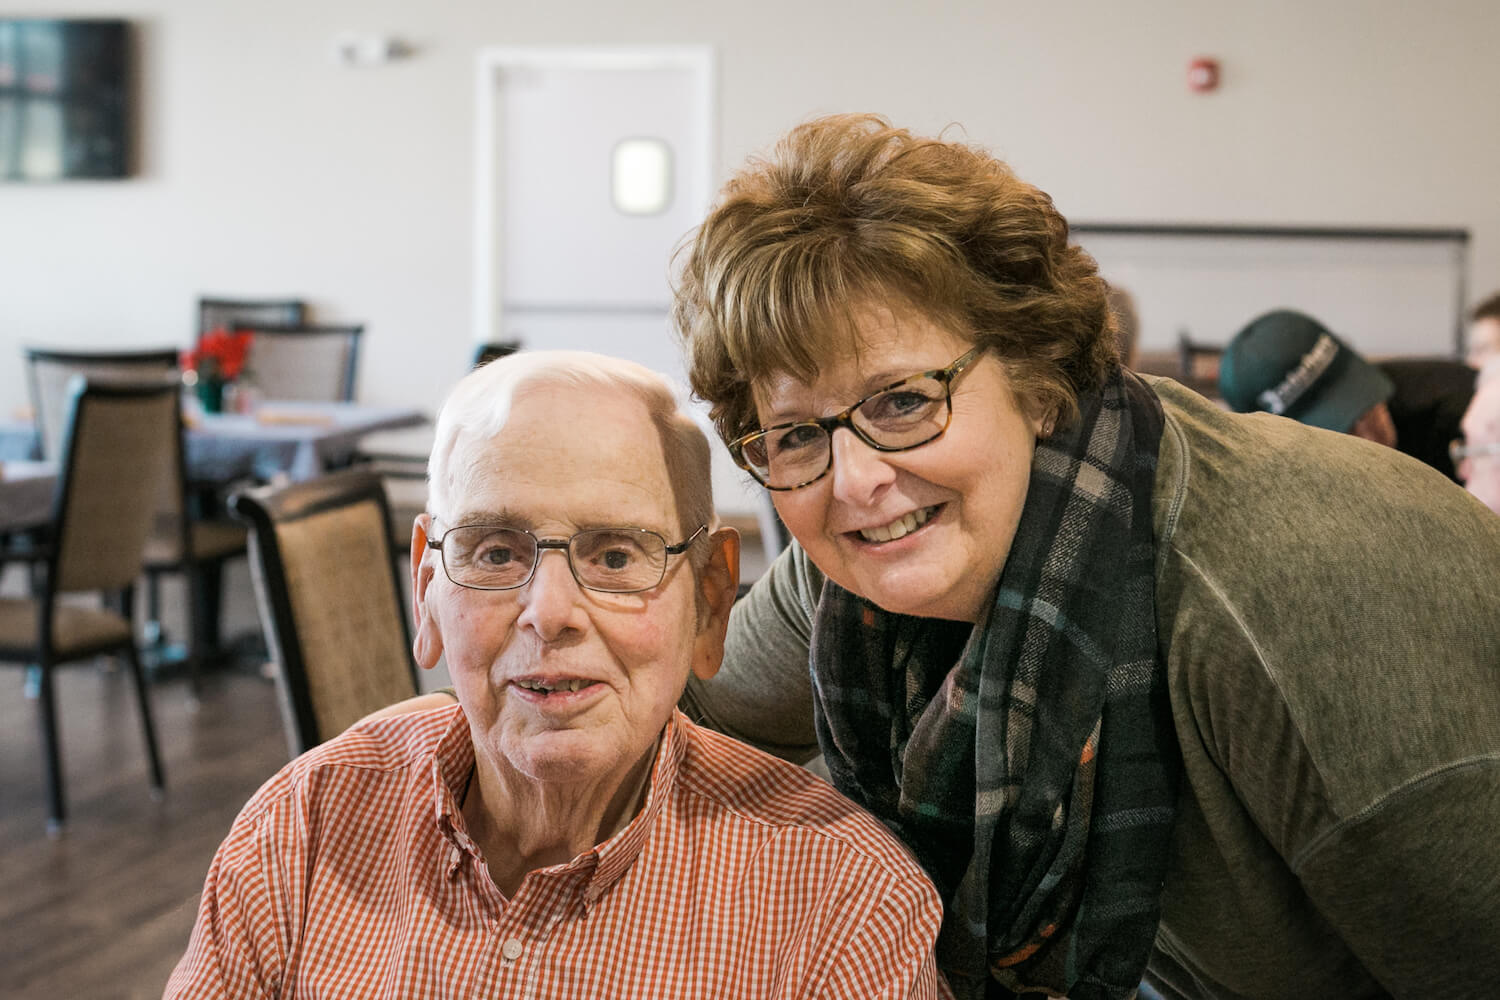 caregiver smiling with senior man